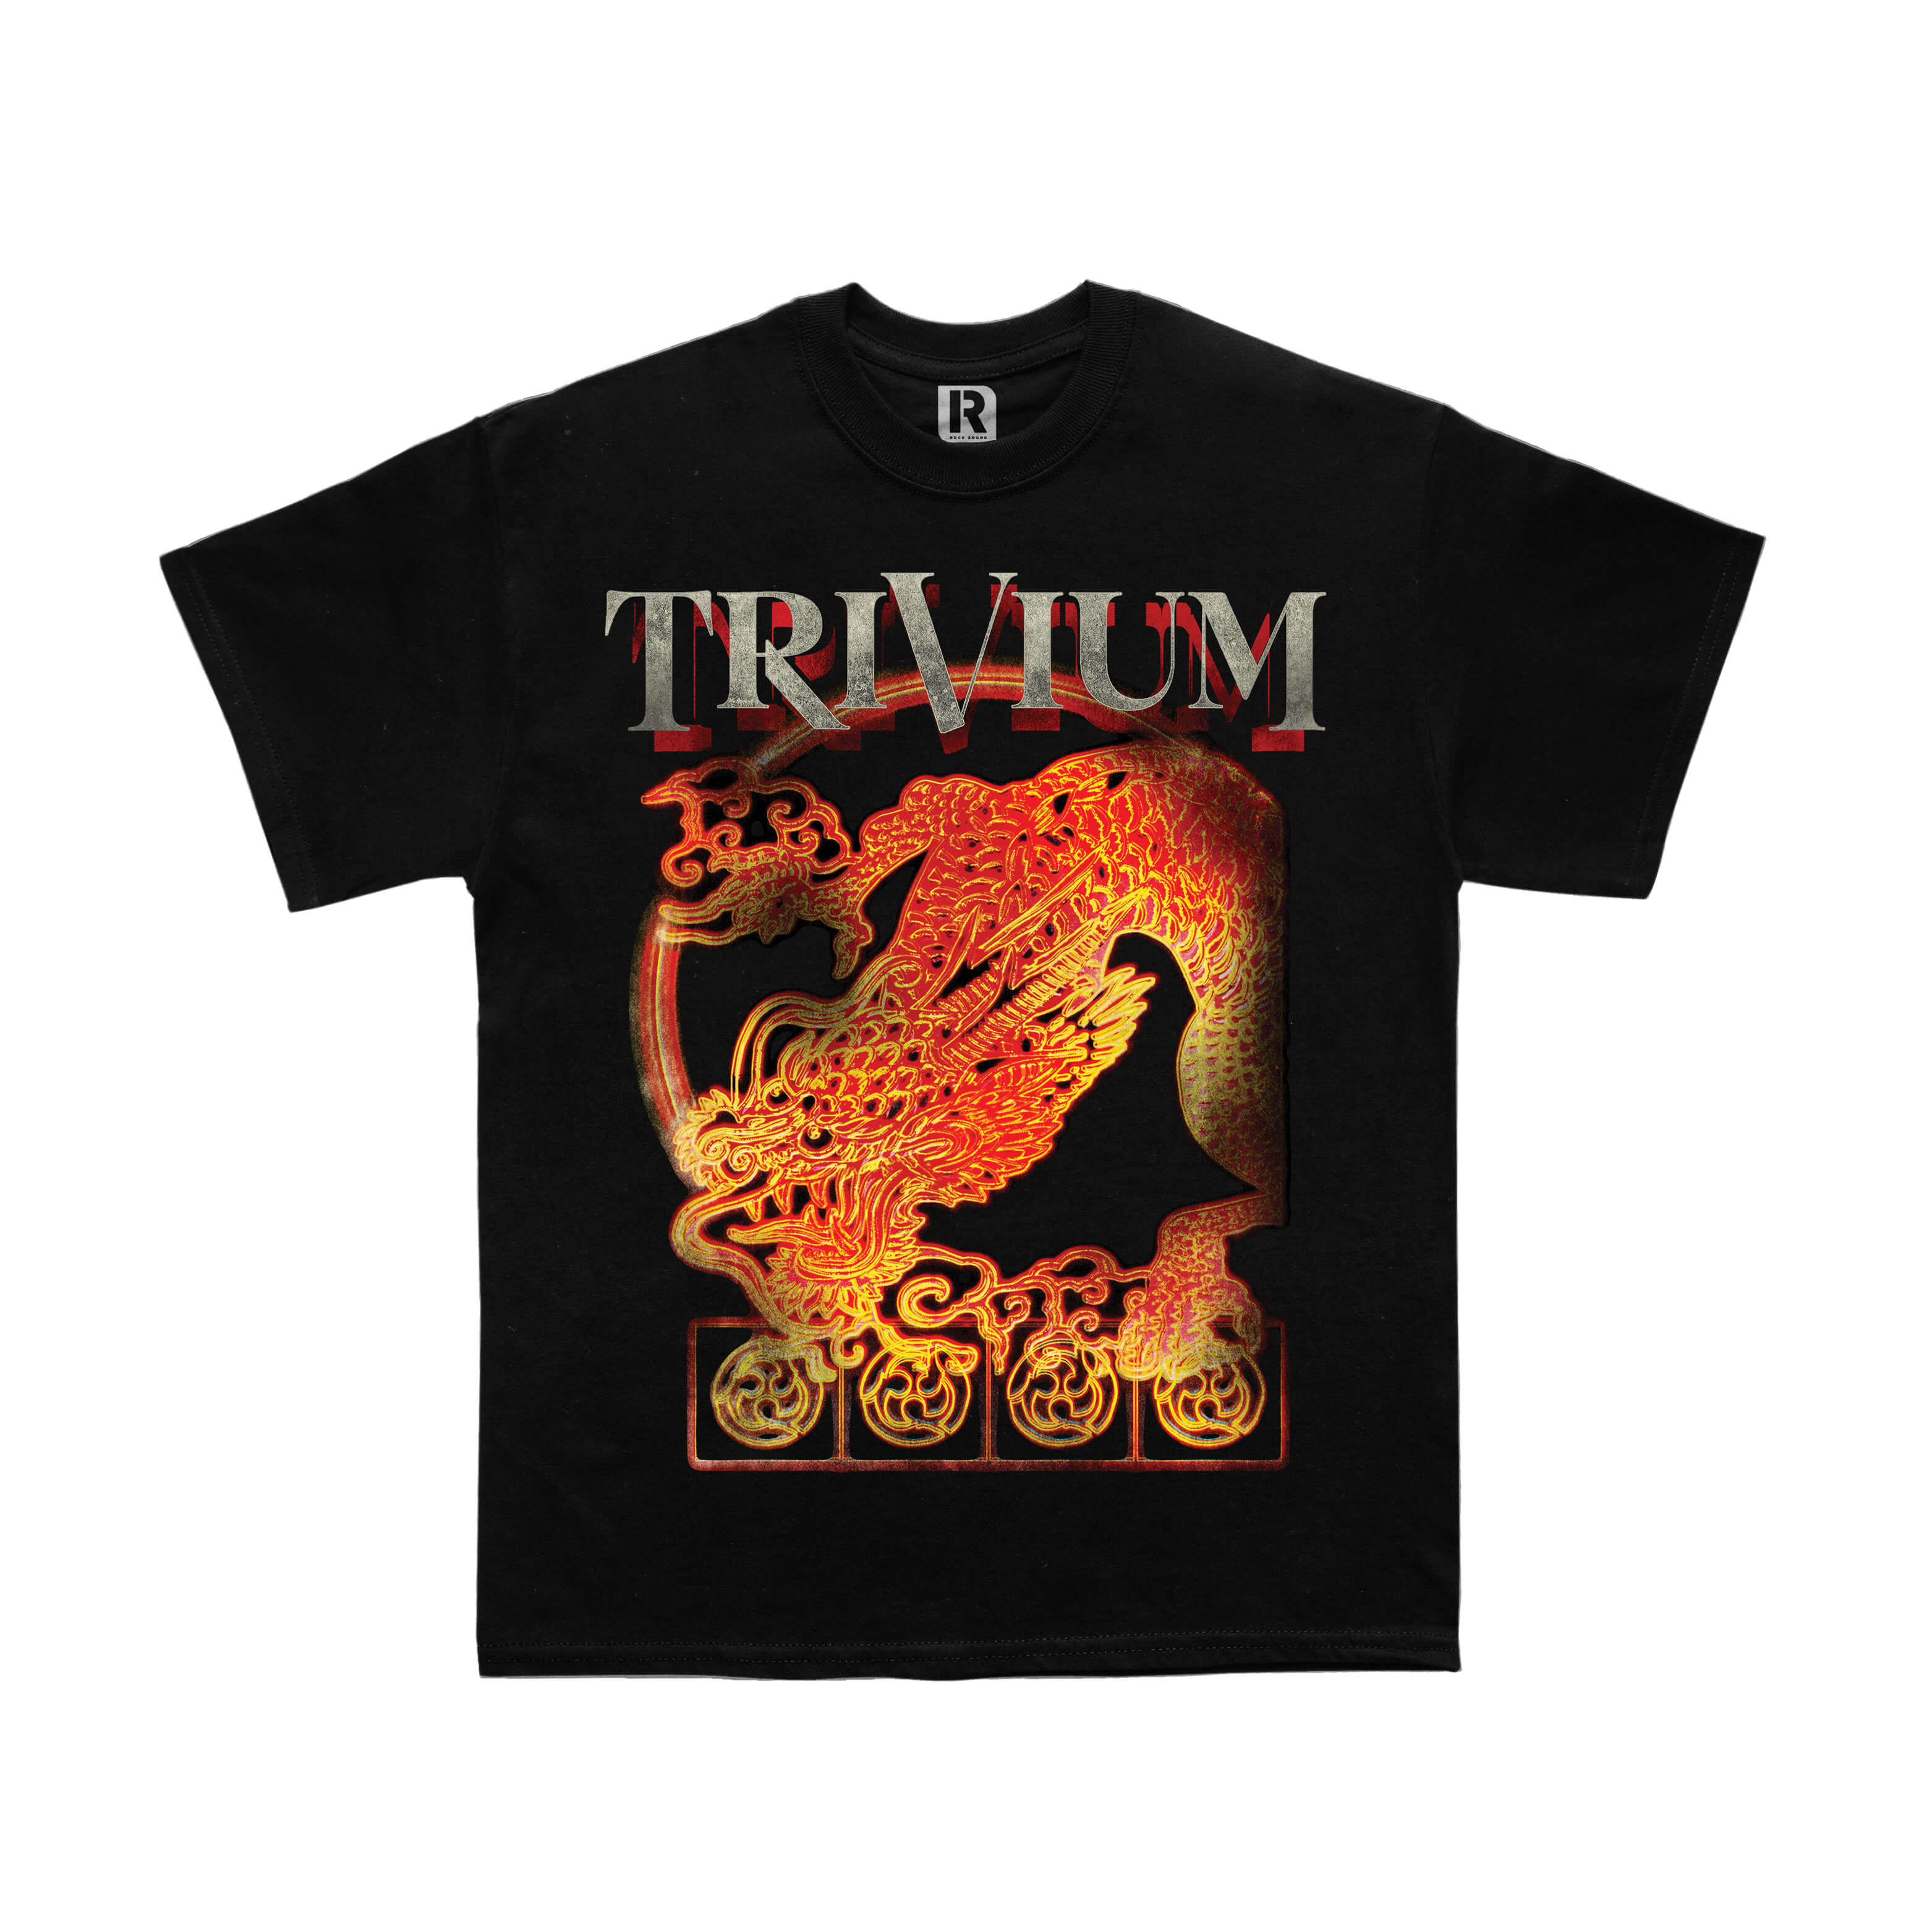 Trivium - Flames T-Shirt